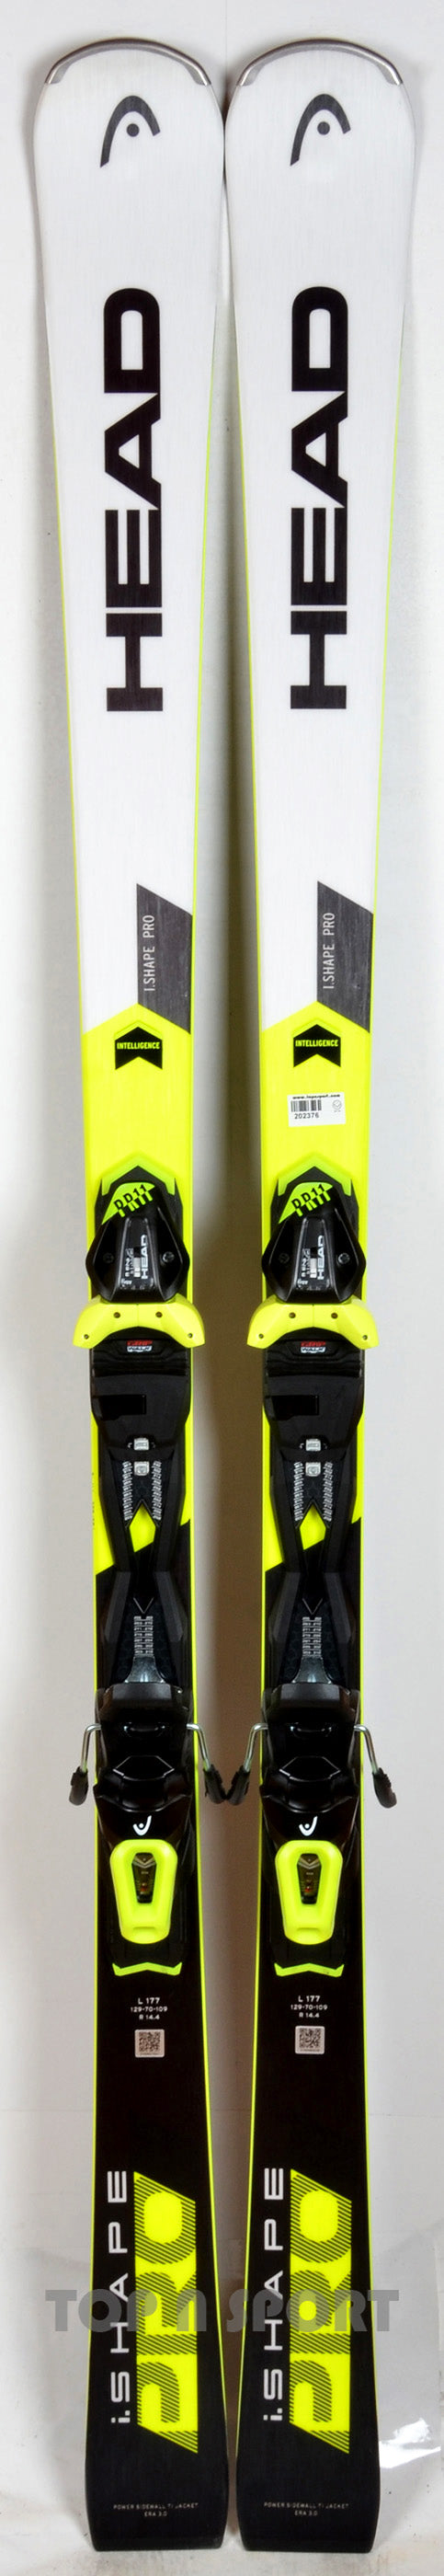 Pack neuf skis Head WC REBELS I.SHAPE PRO  avec fixations - neuf déstockage